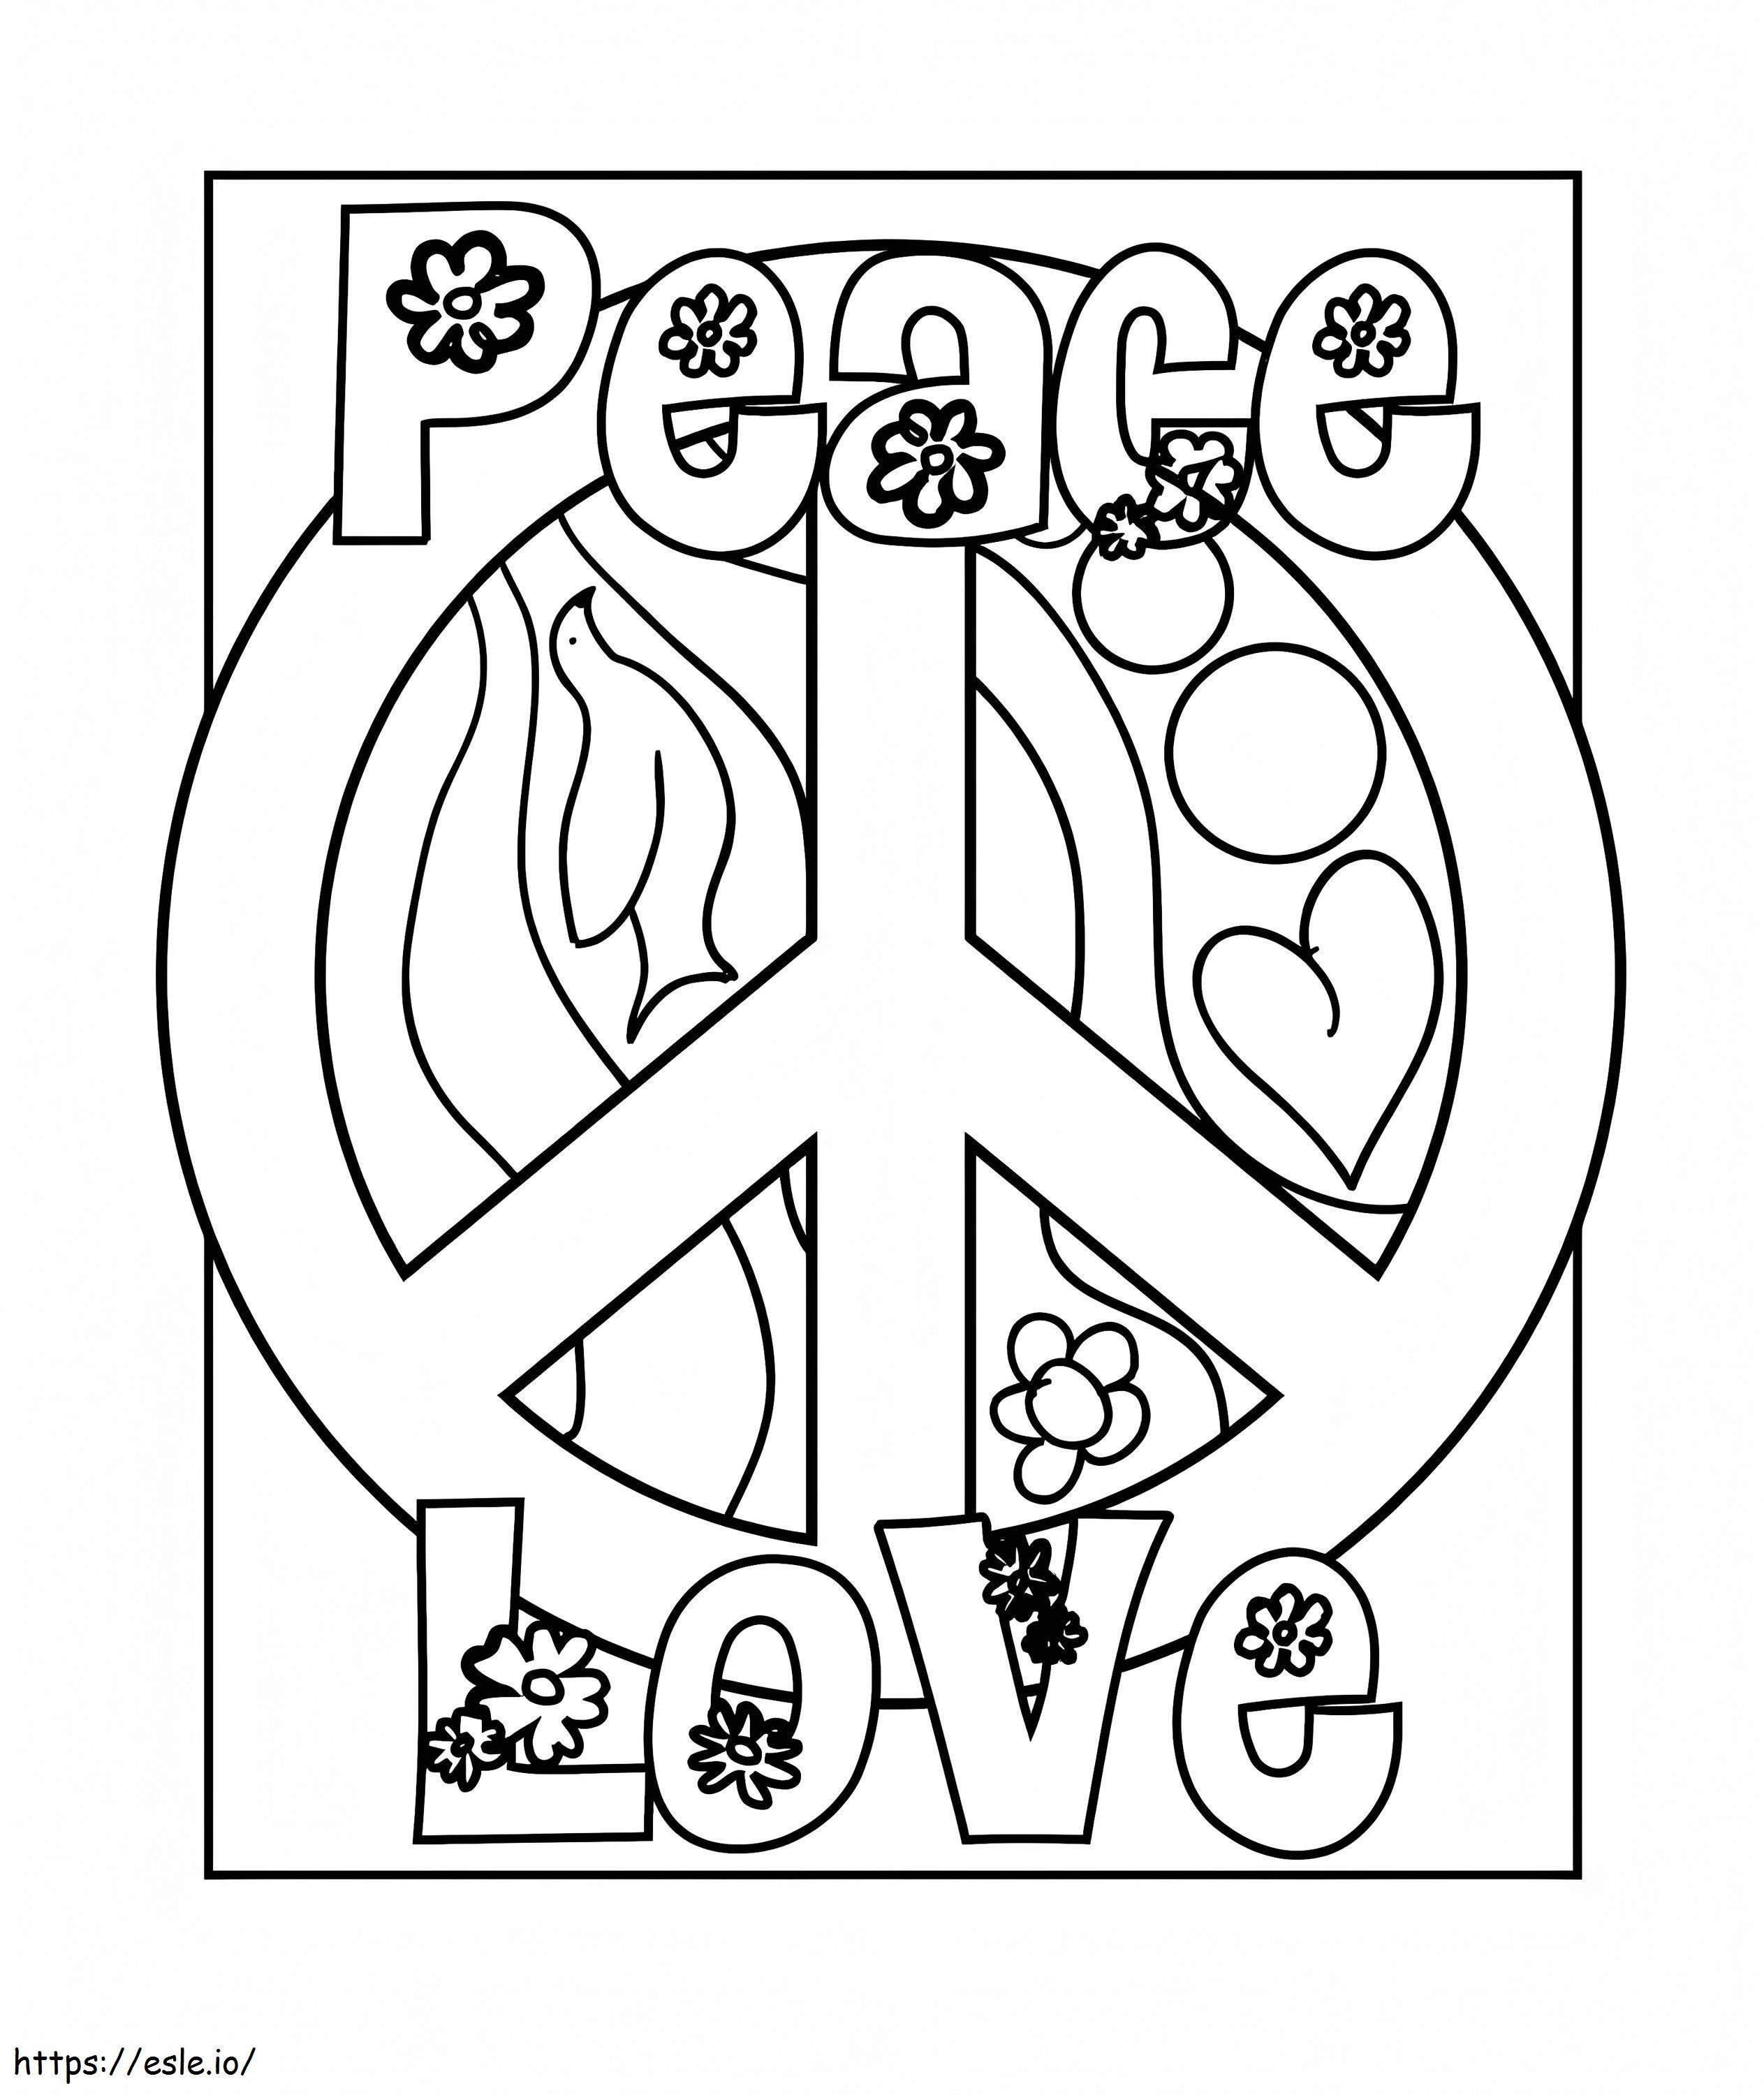 Barış sevgi boyama